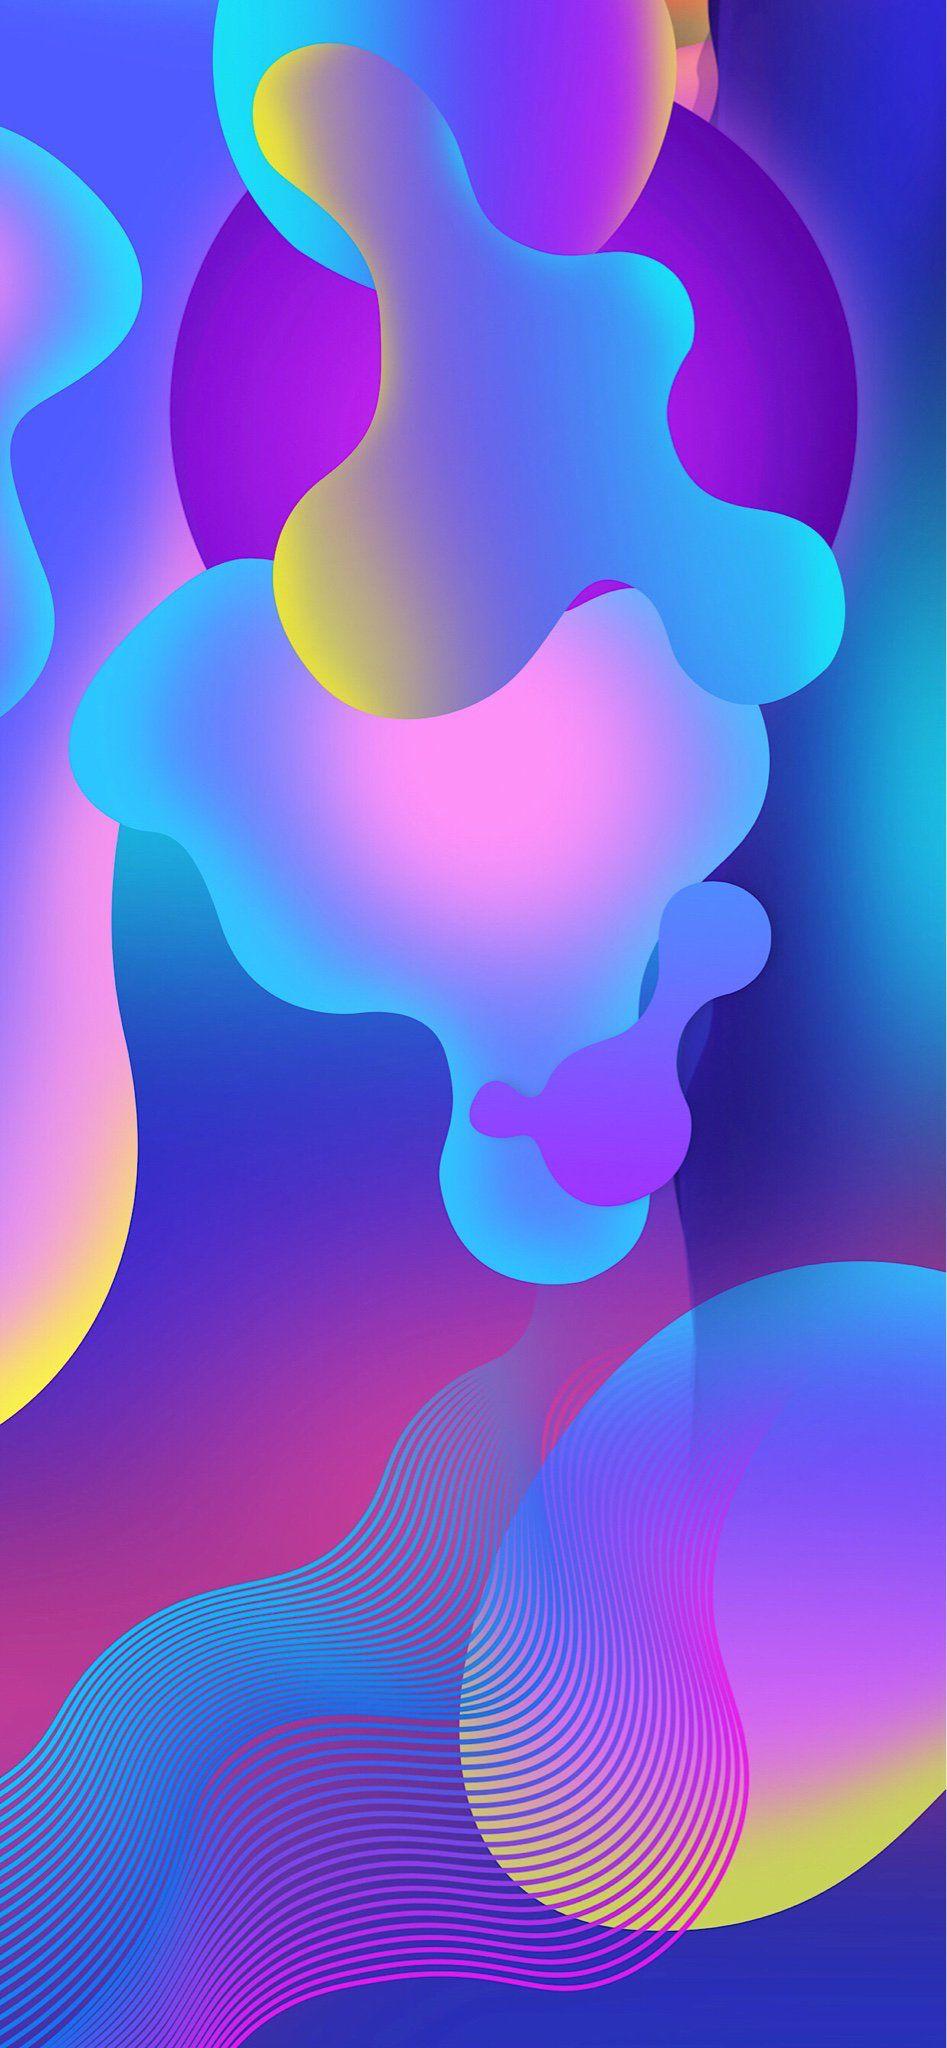 iPhone XS Max Wallpaper. Solid & Blurred Colors. HD